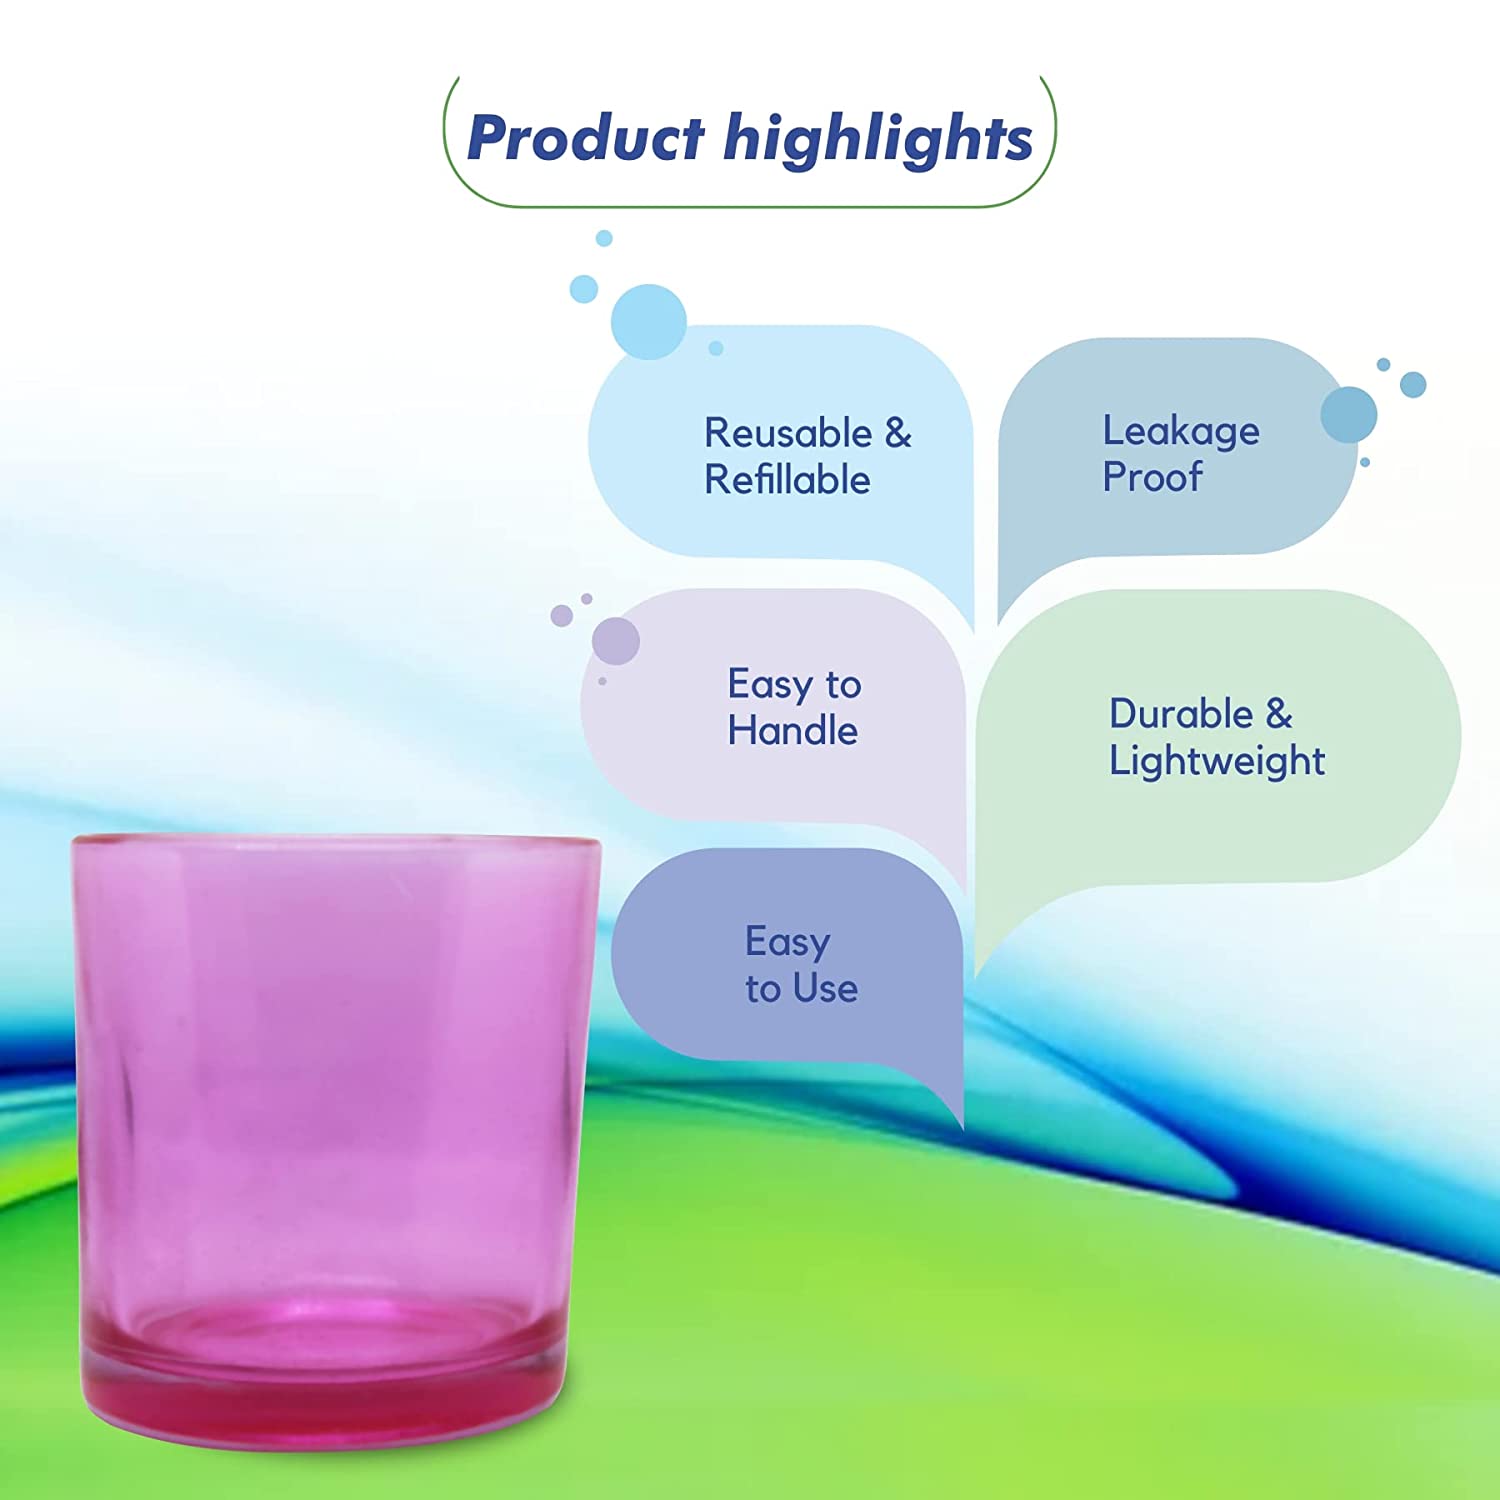 Shoprythm Packaging,Cosmetic Jar Pink  Glass Candle Jar